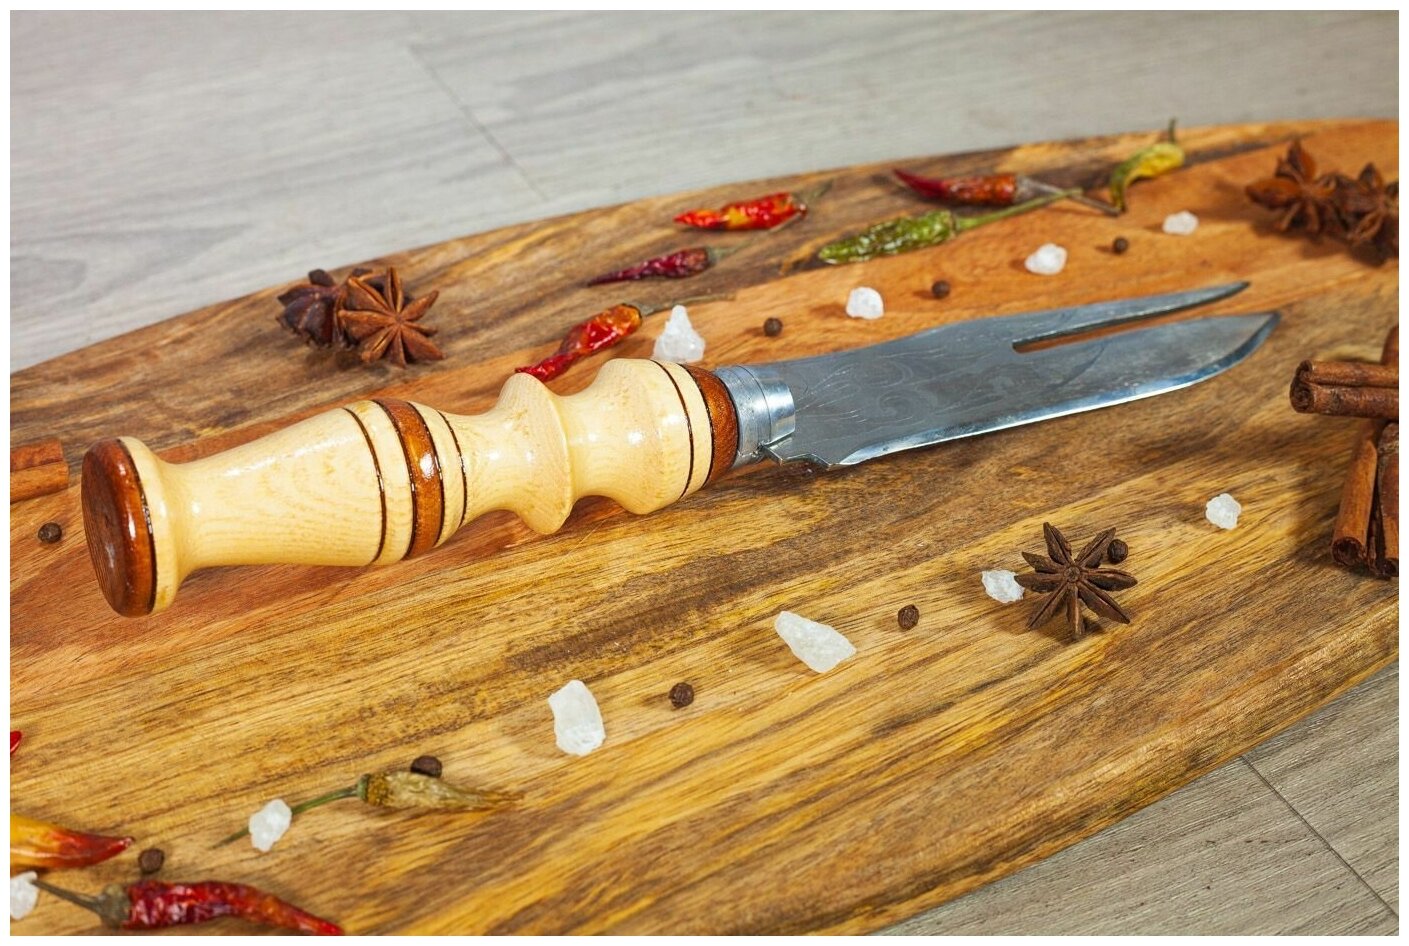 Вилка - нож для снятия мяса с резной рукоятью и гравировкой на лезвии №2 - фотография № 4